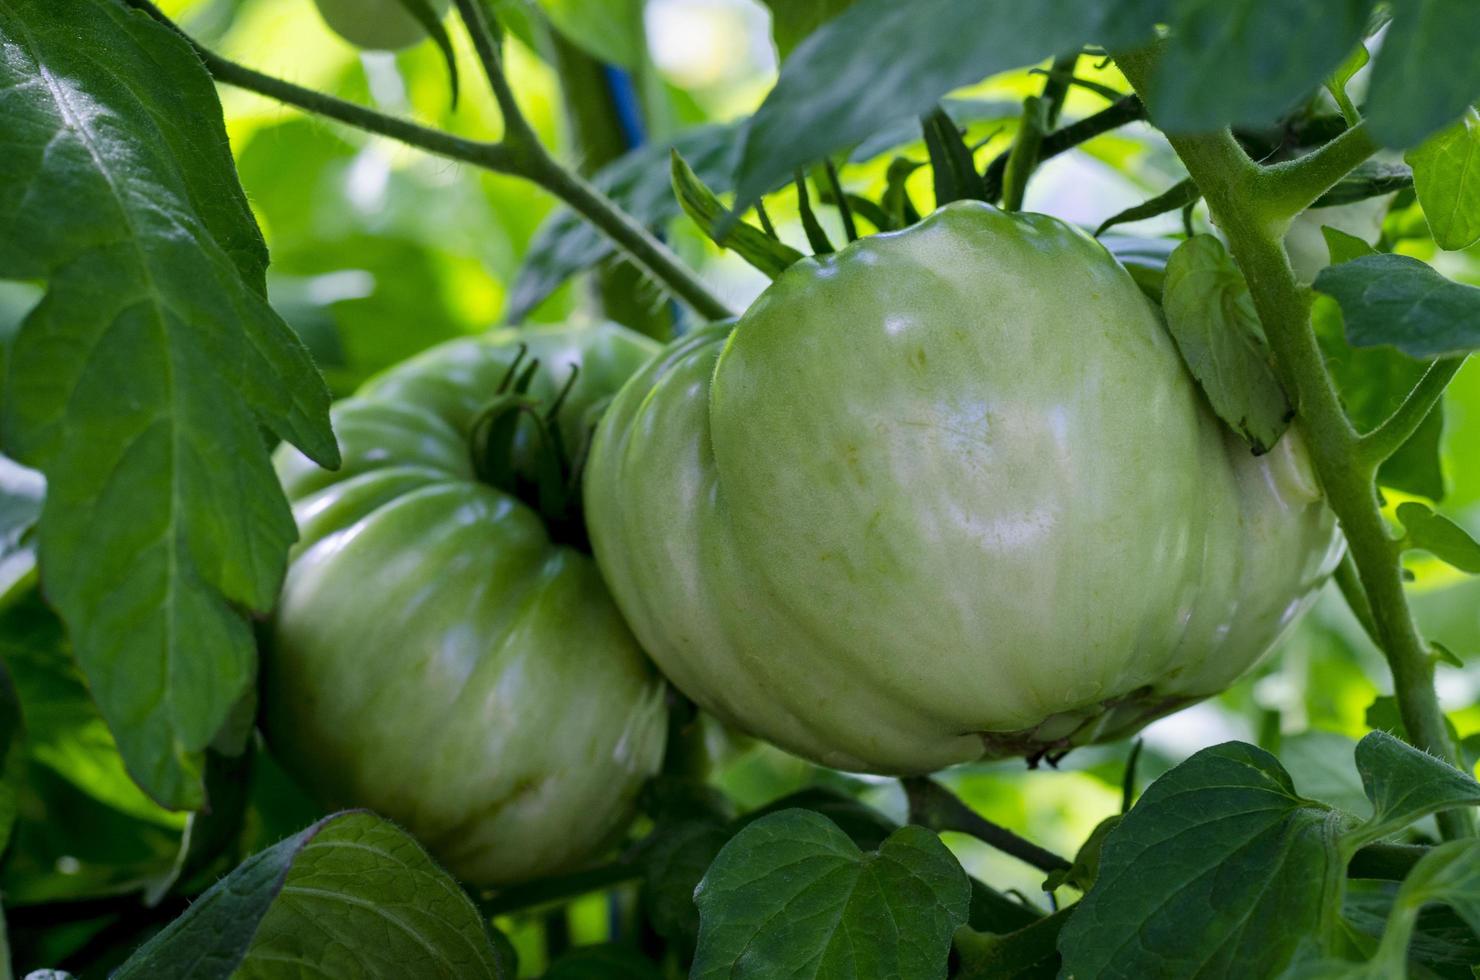 groene onrijpe tomaten op struik, bio, groeiende groenten foto